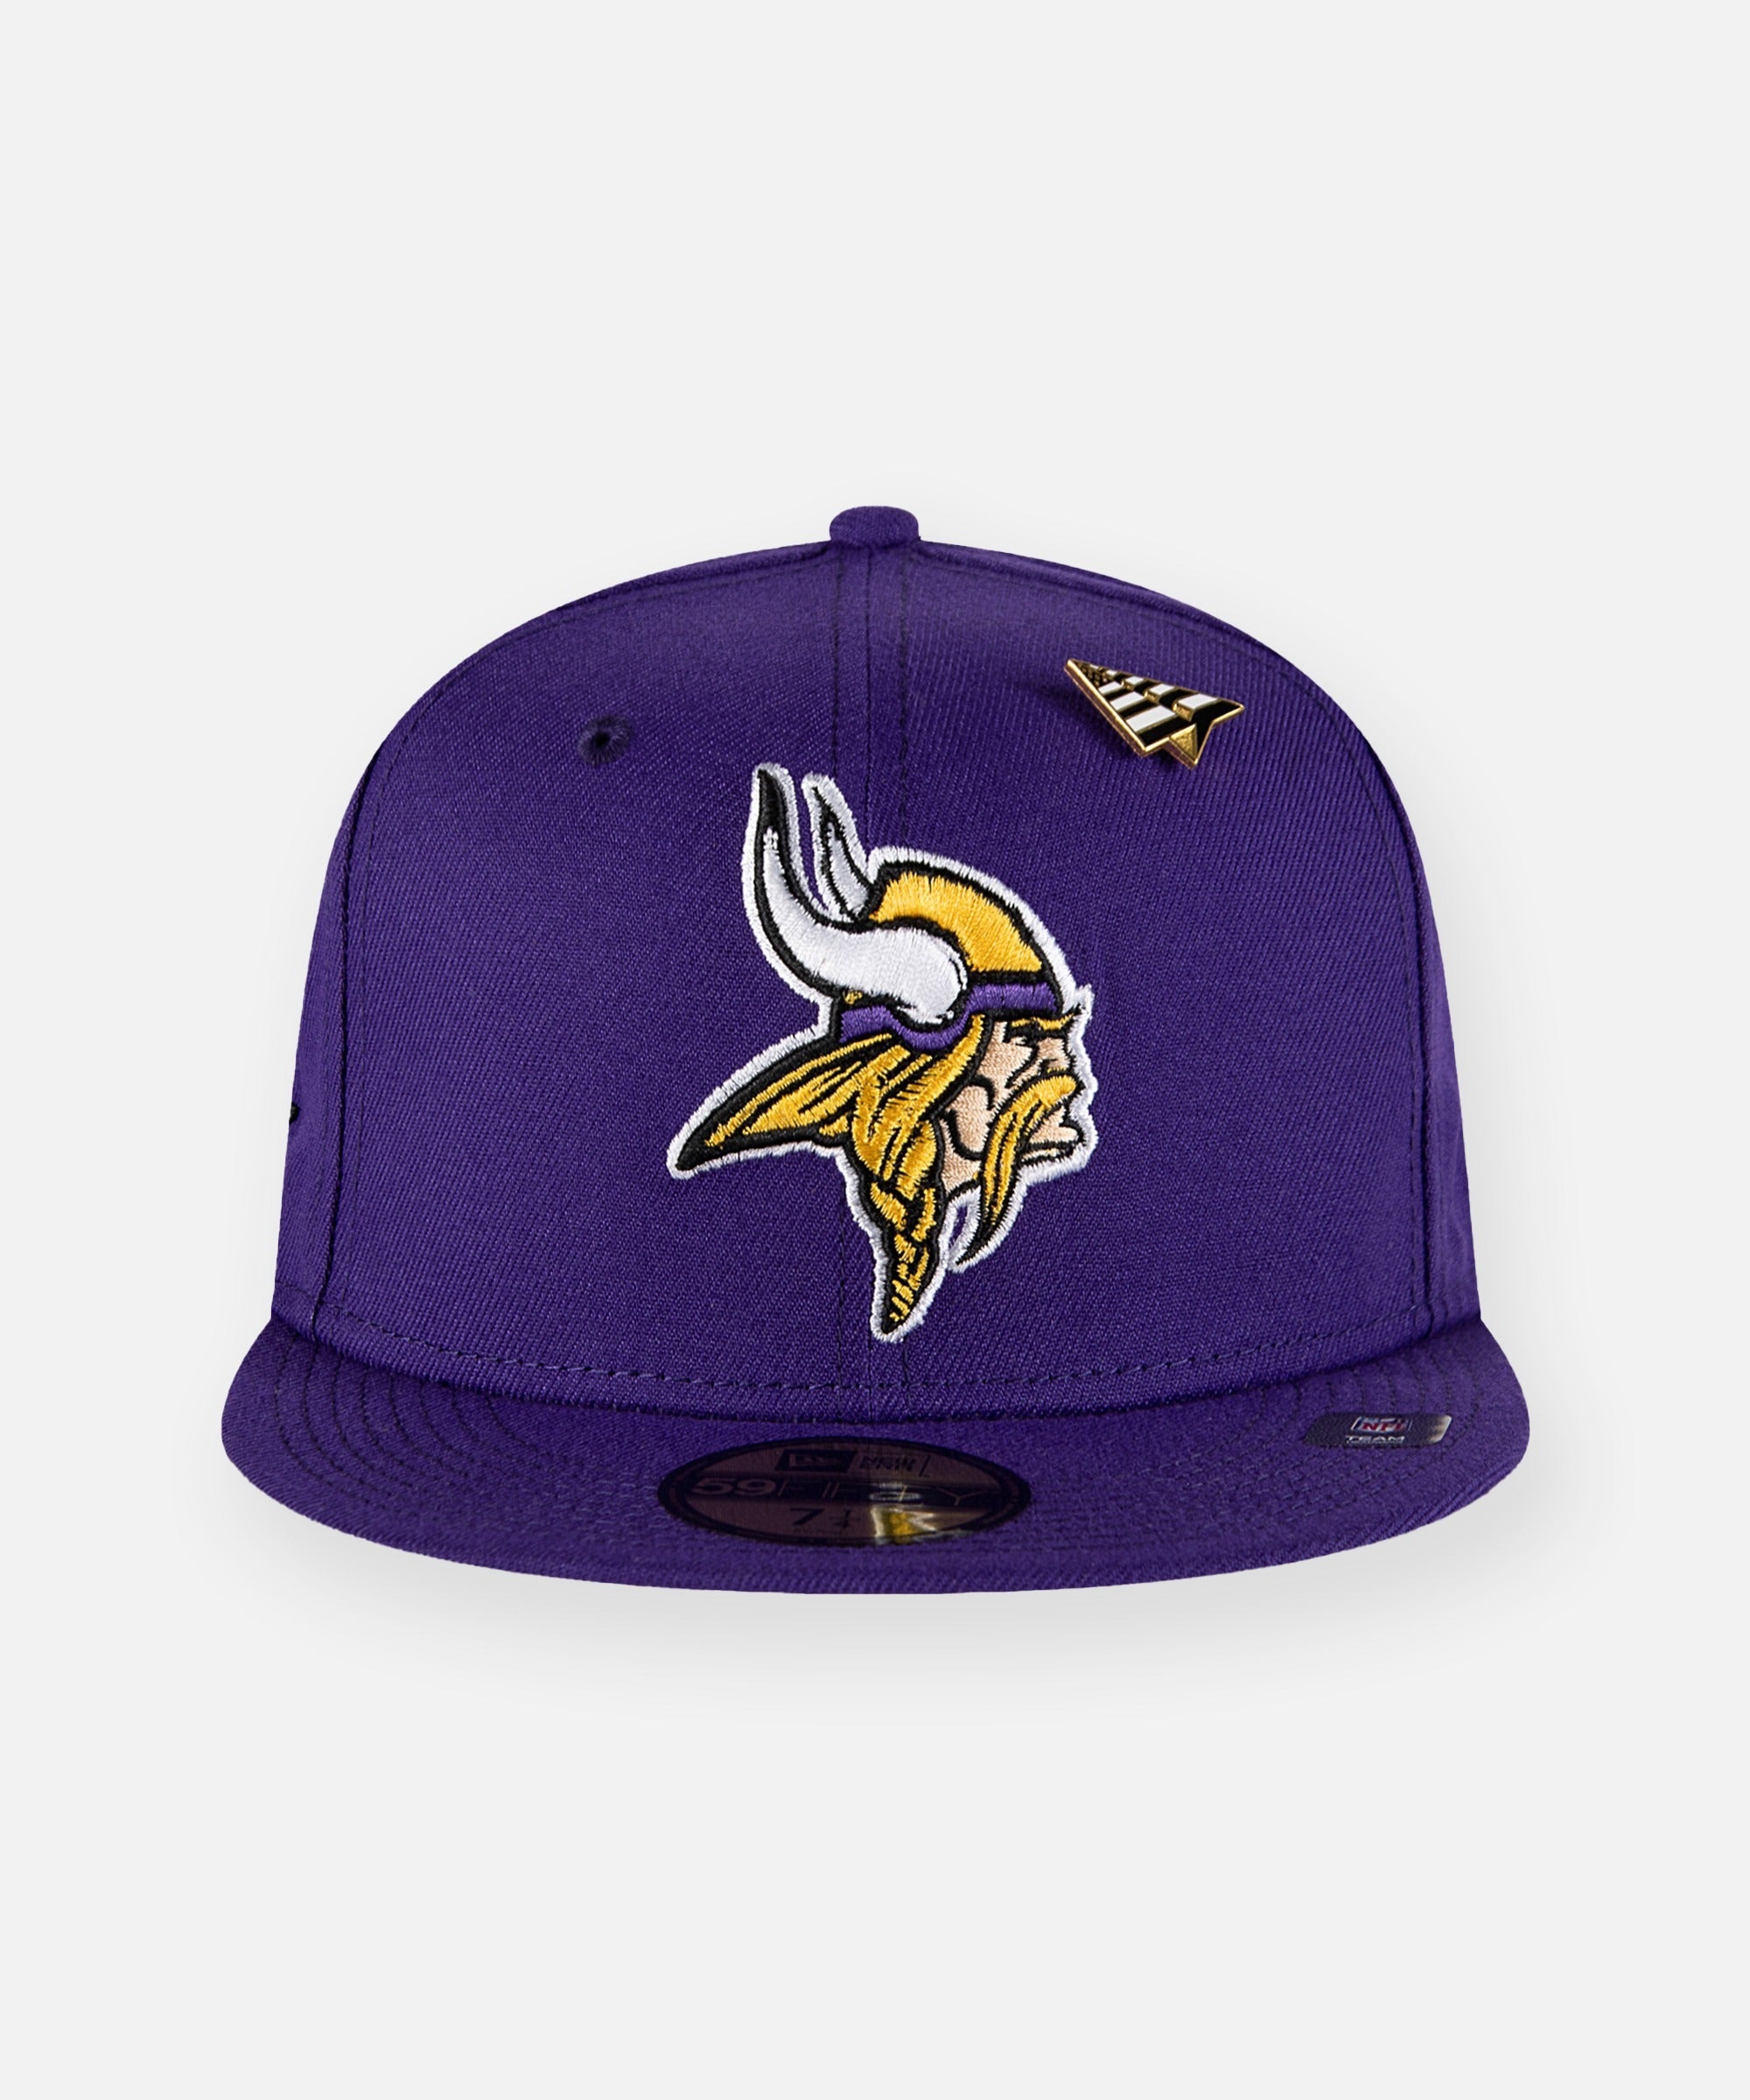 Minnesota Vikings (@Vikings) / X